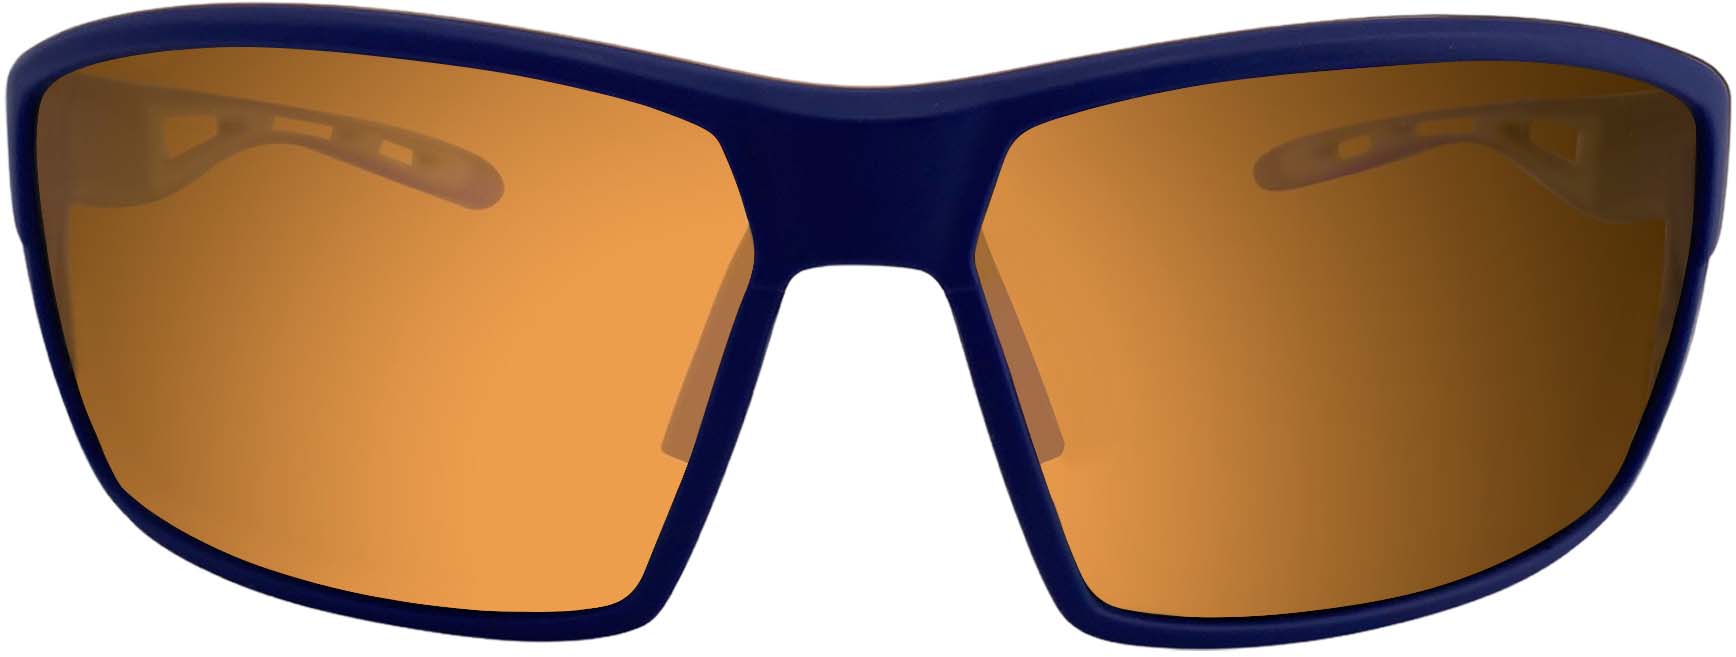 RLVNT Triton Series Sunglasses